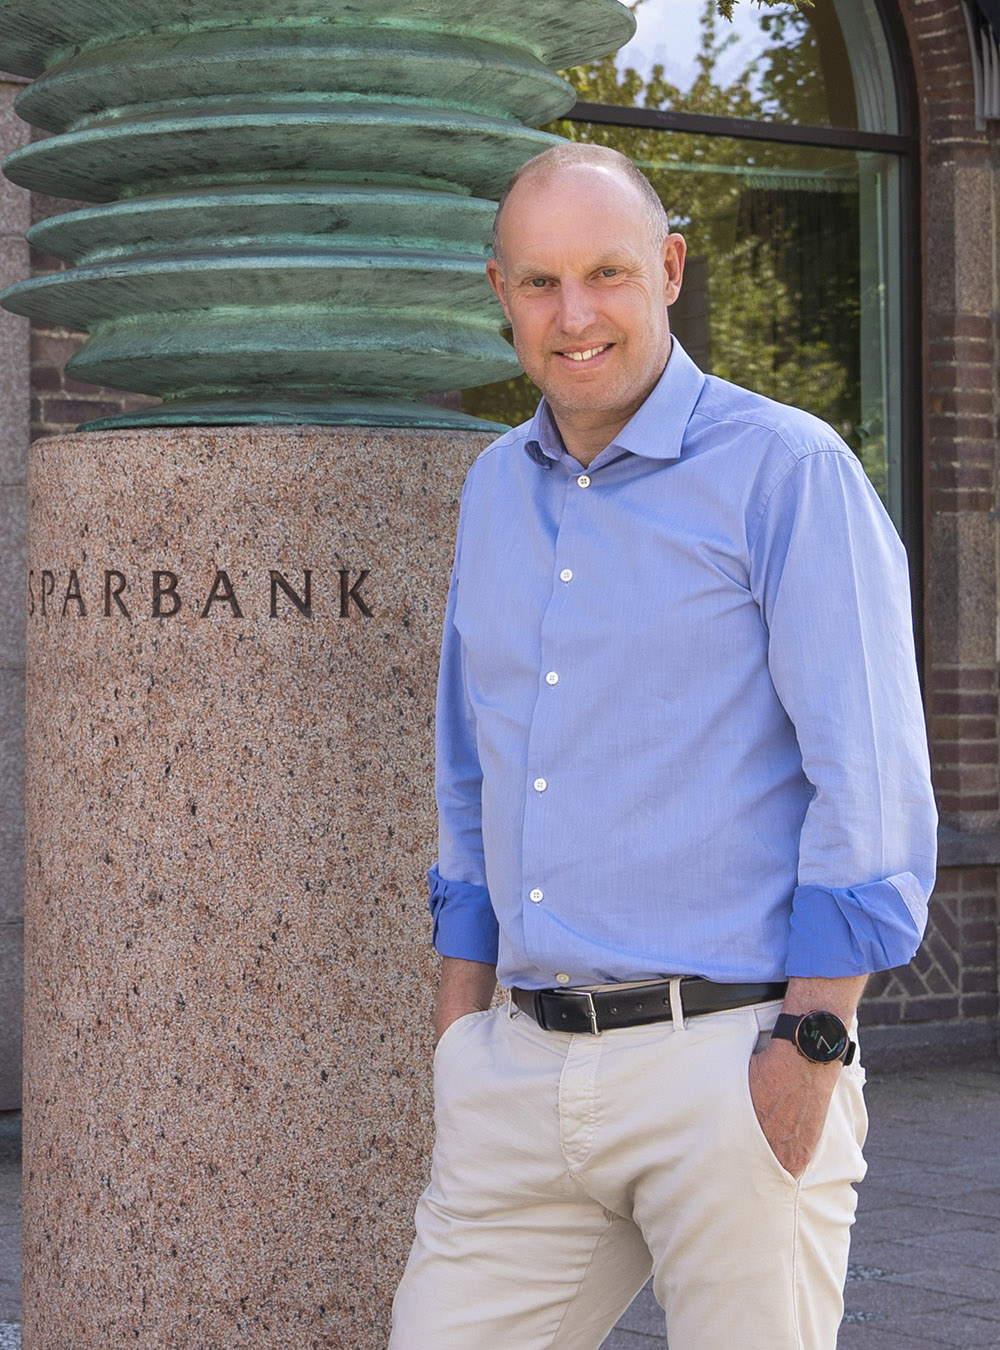 Stefan Ohlson, VD på Sparbanken, står framför bankens kontor i Sölvesborg